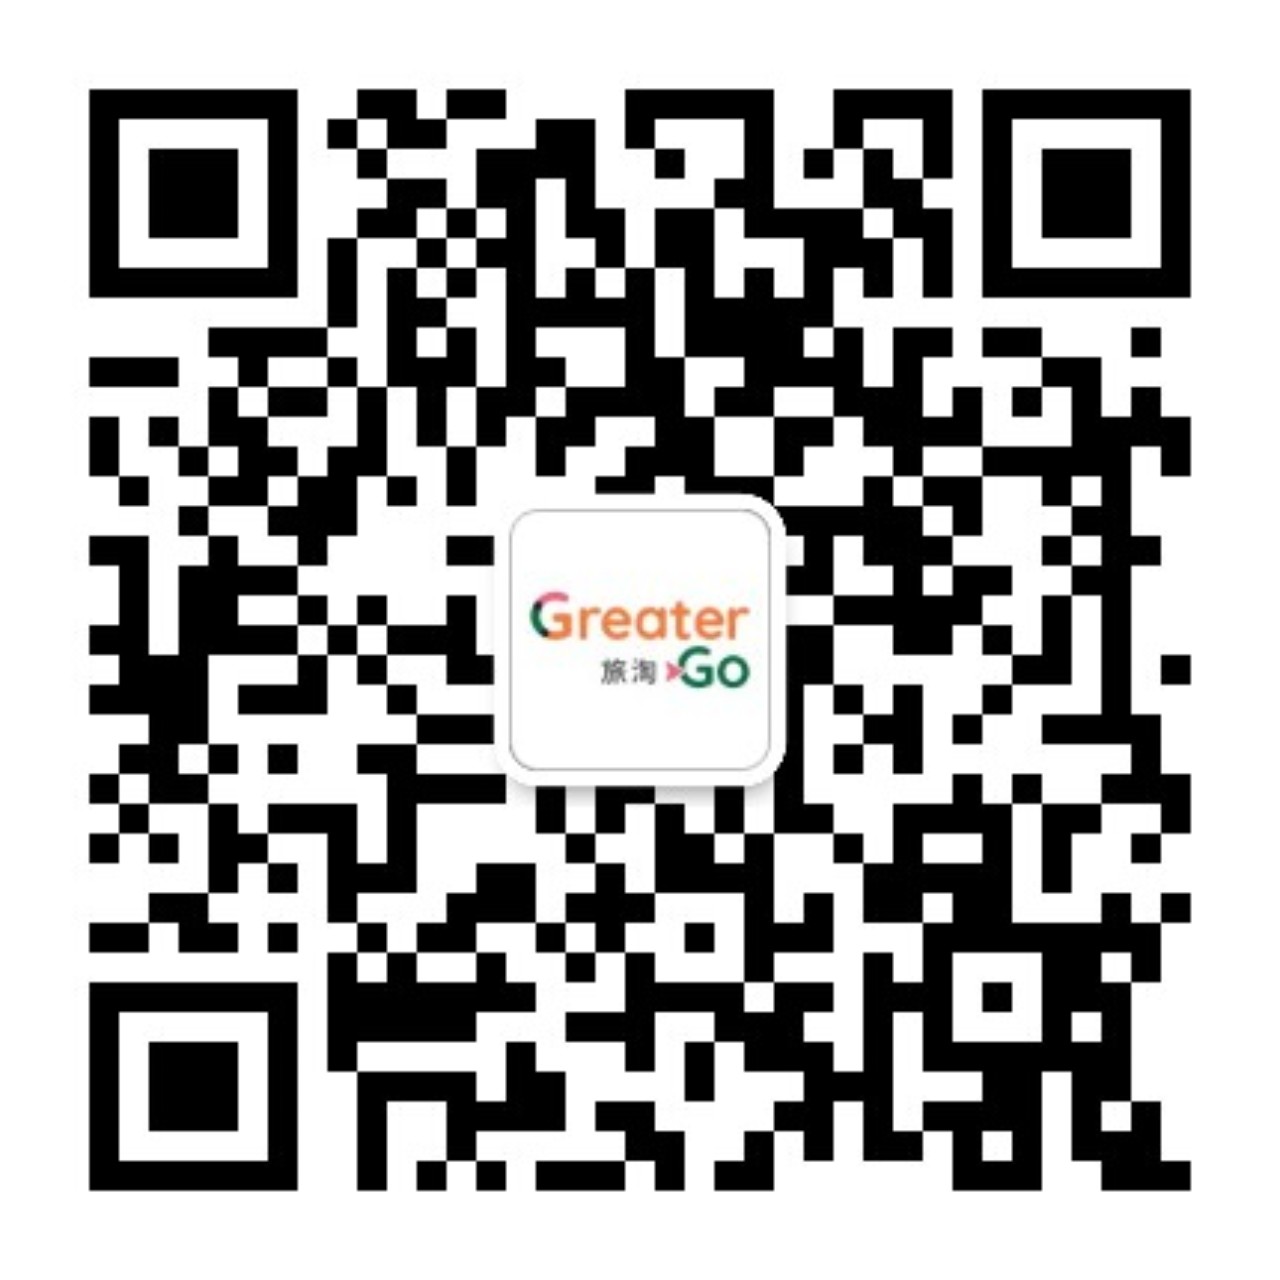 Our WeChat QR Code